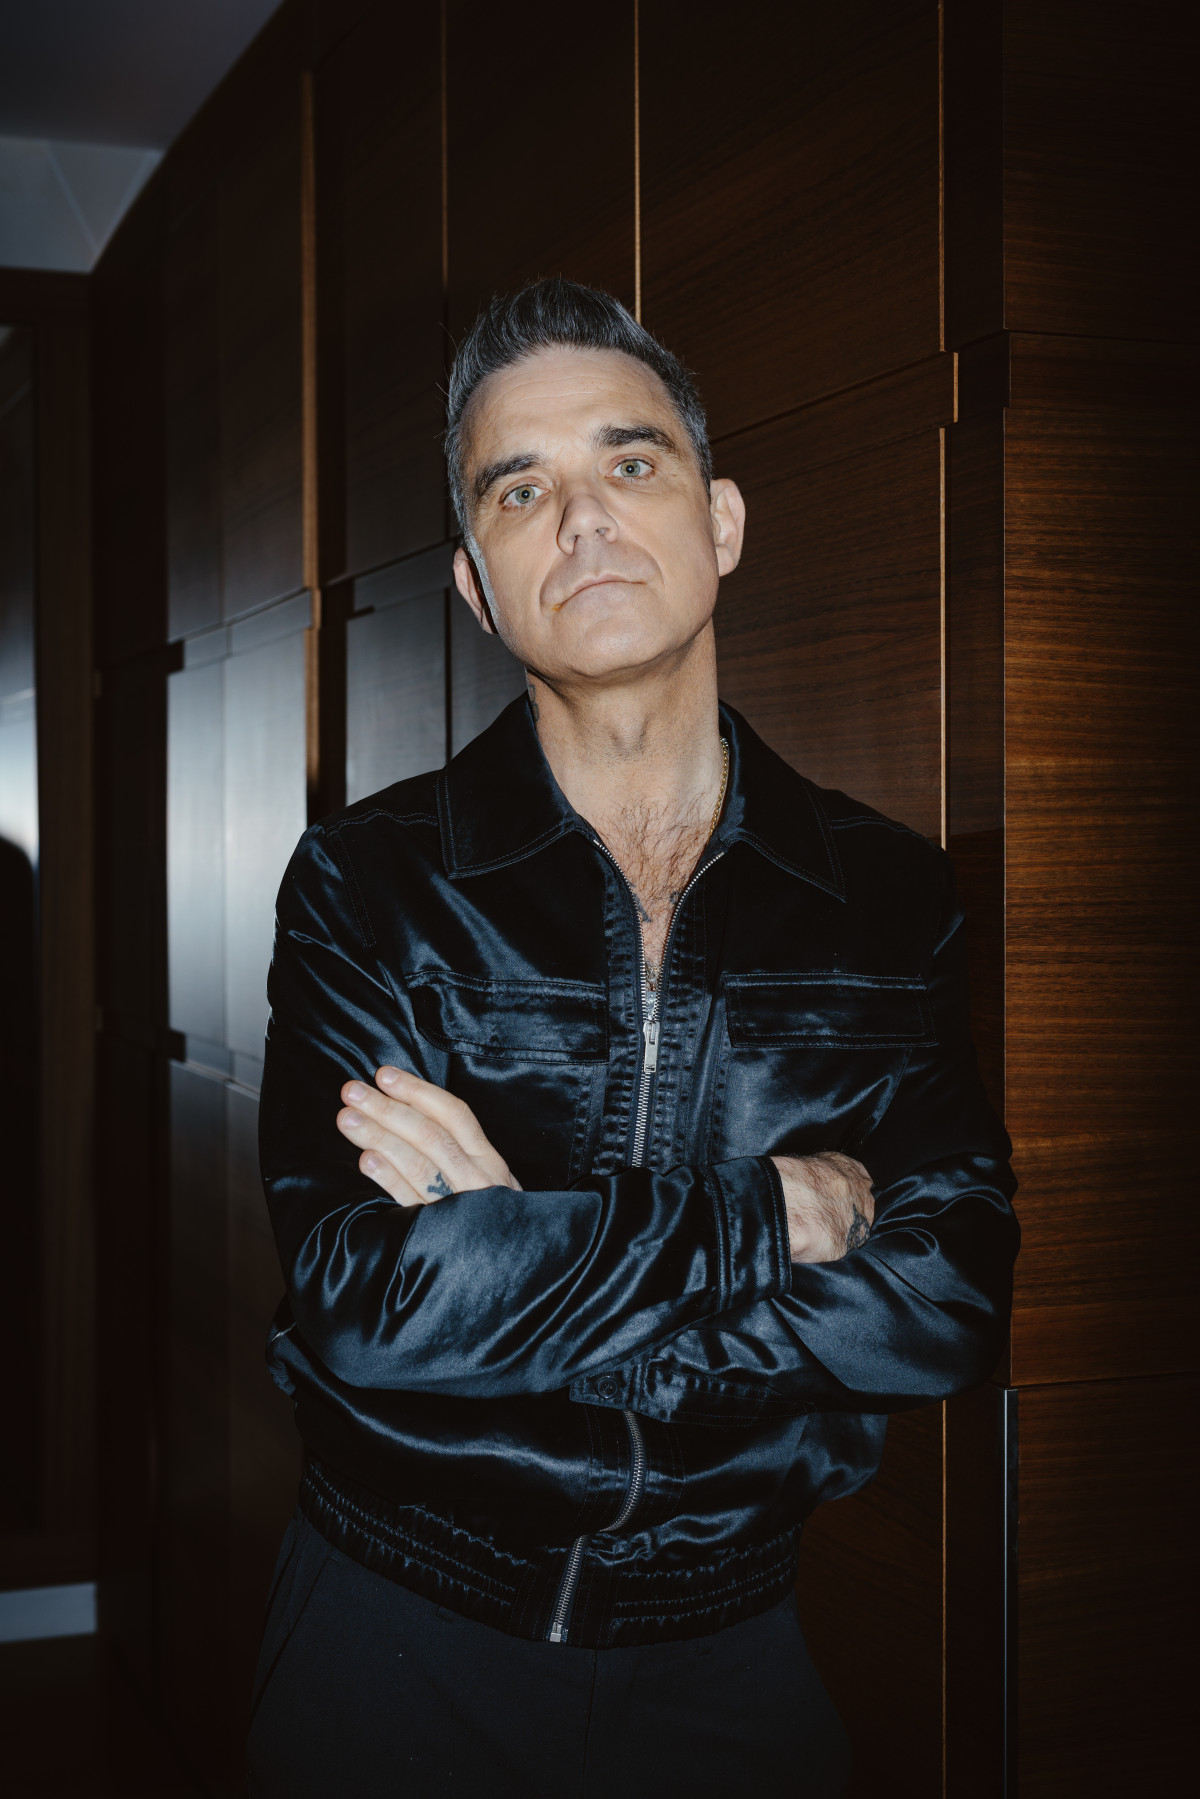 Image 2: Robbie Williams